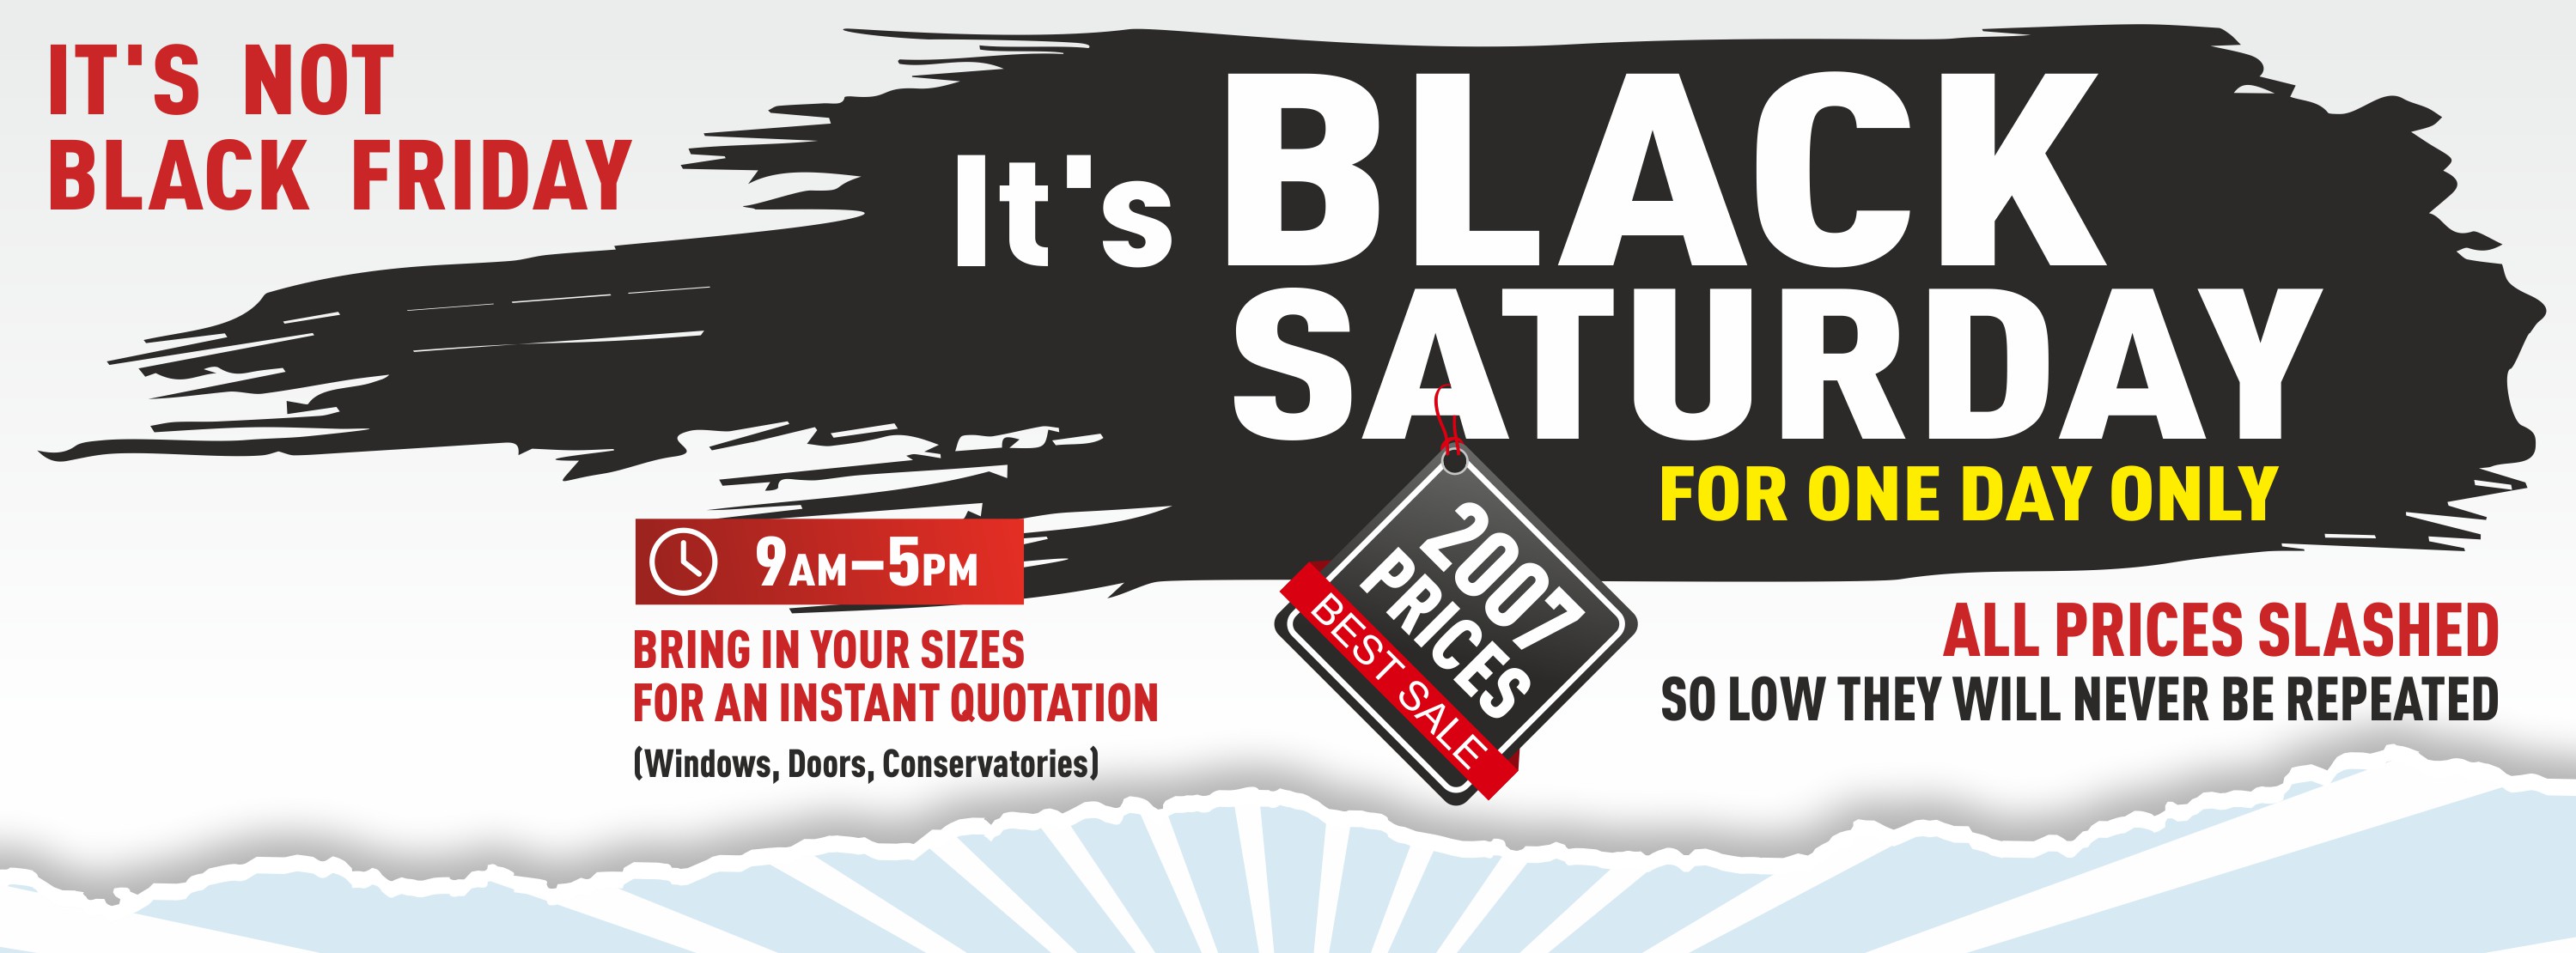 Black Saturday Sale